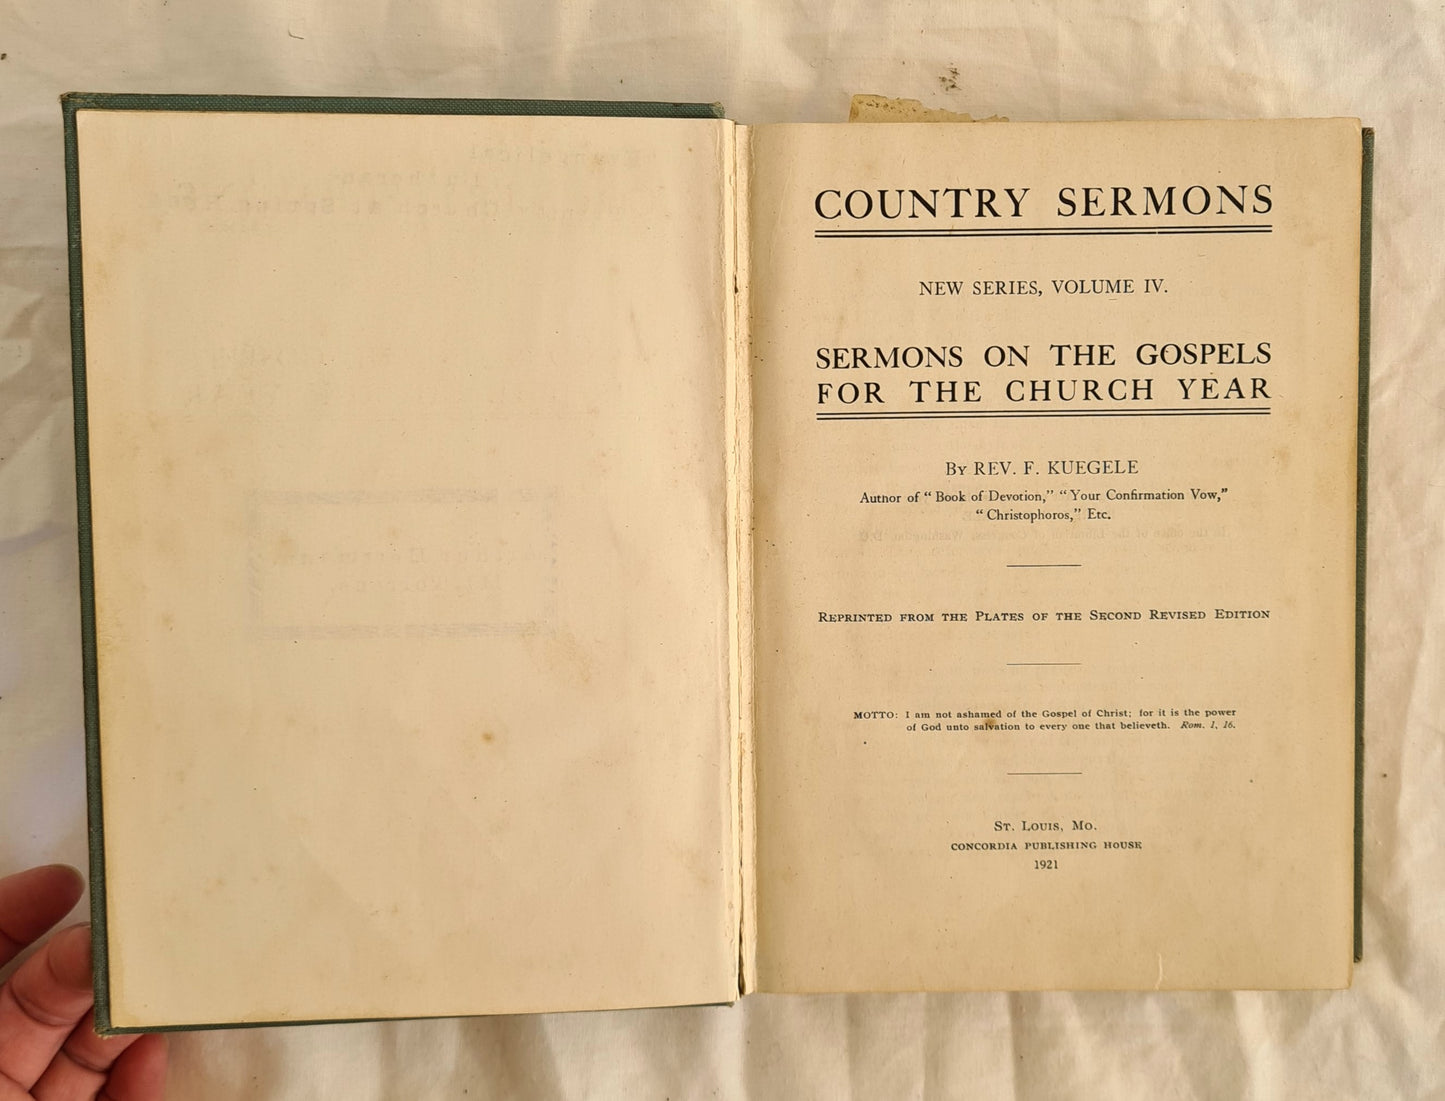 Country Sermons by Rev. F. Kuegele